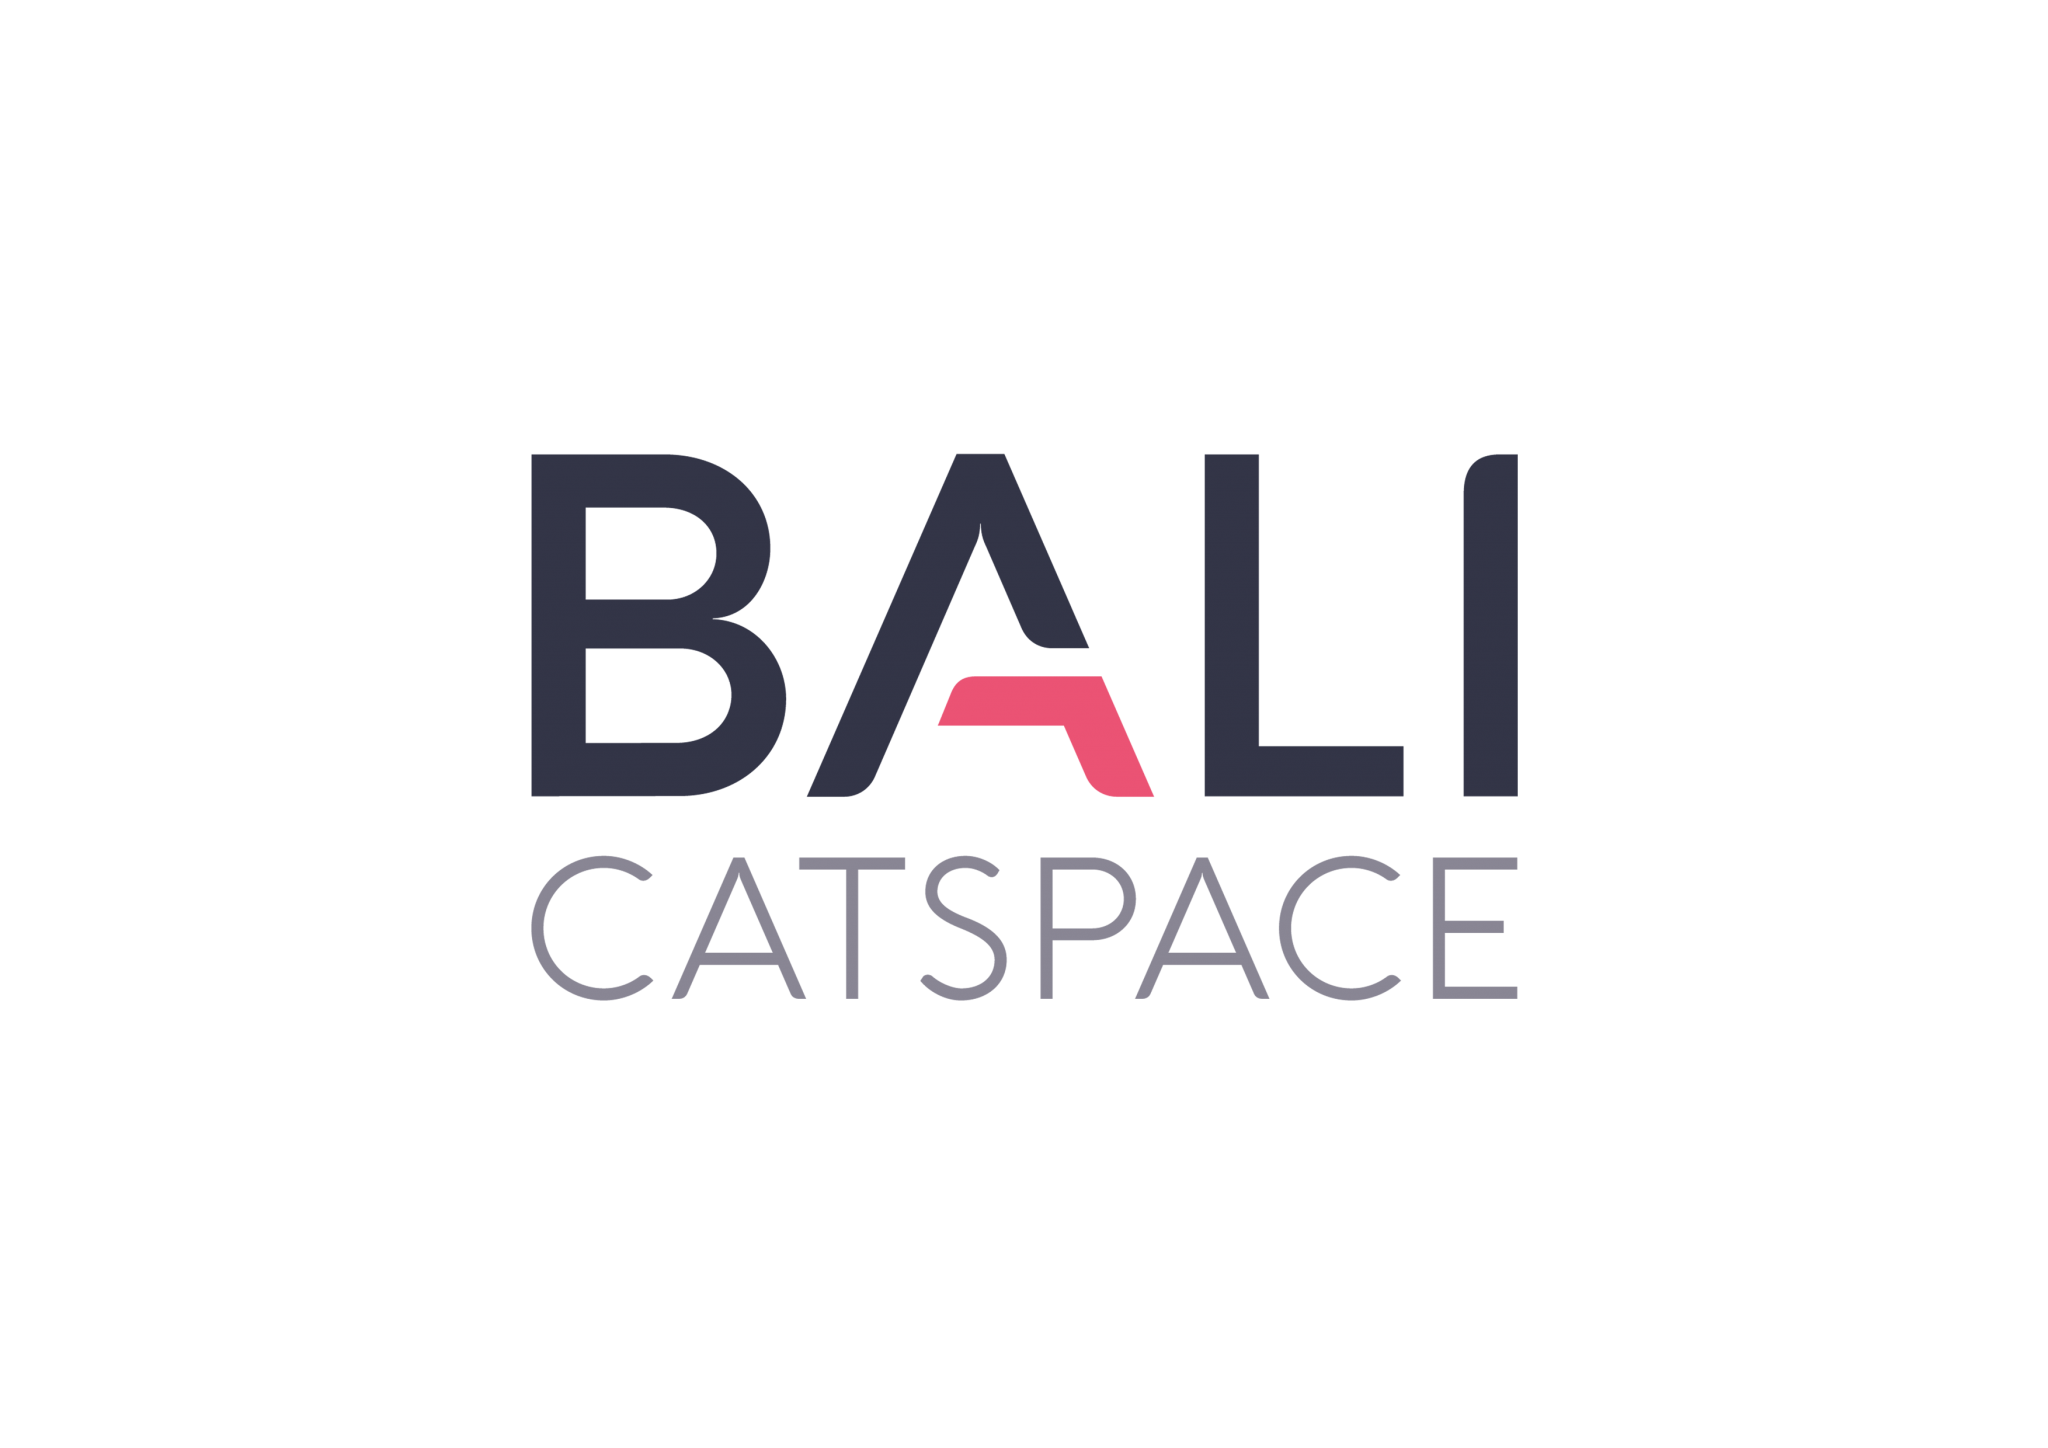 BALI CATSPACE VOILE